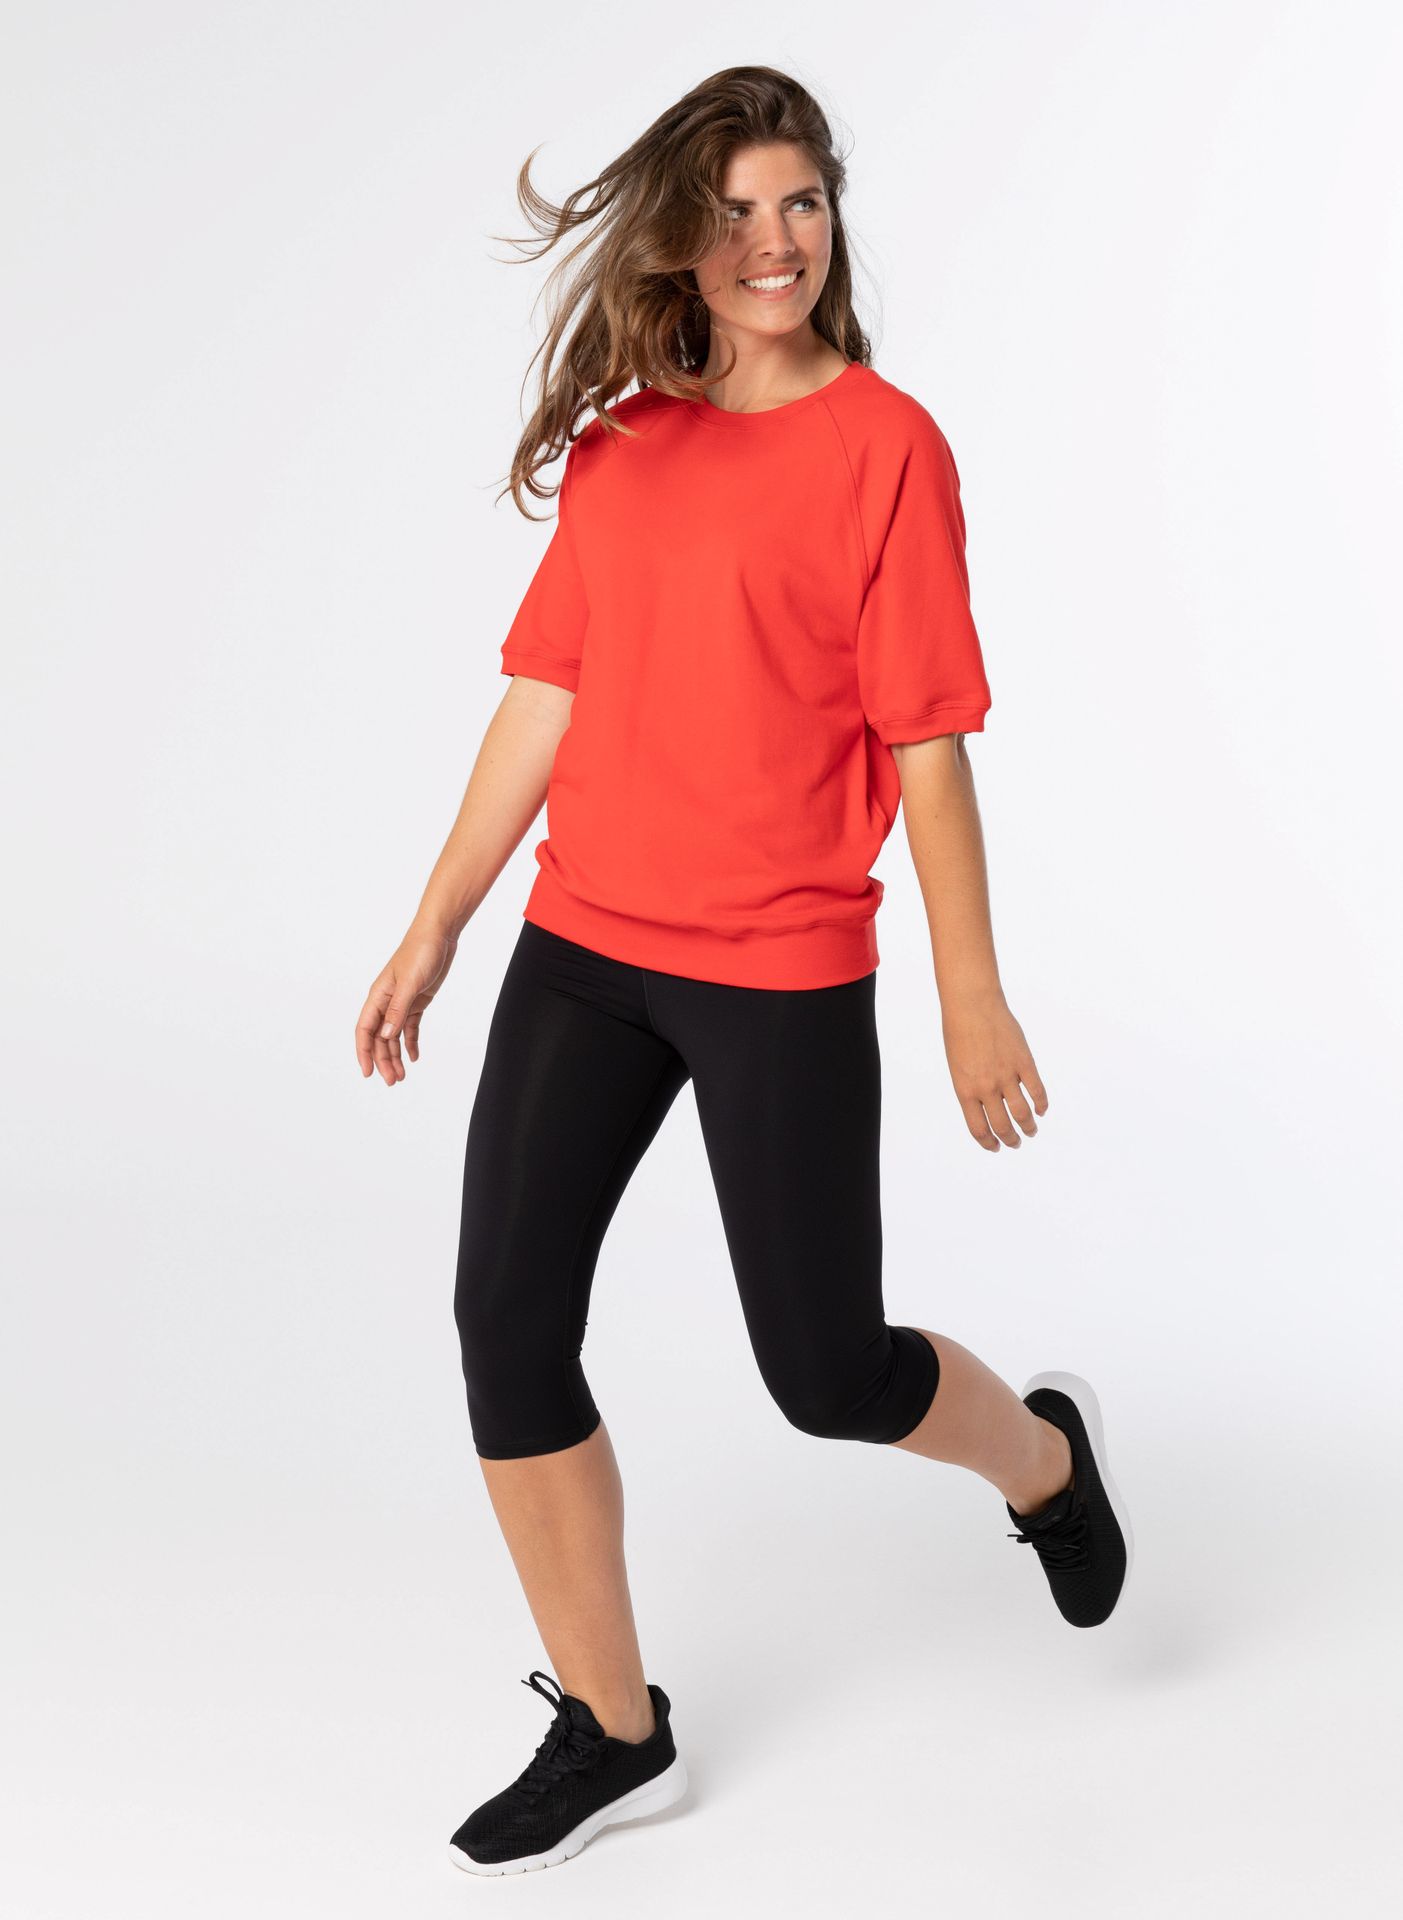 Norah Jumper - Activewear red 211905-600